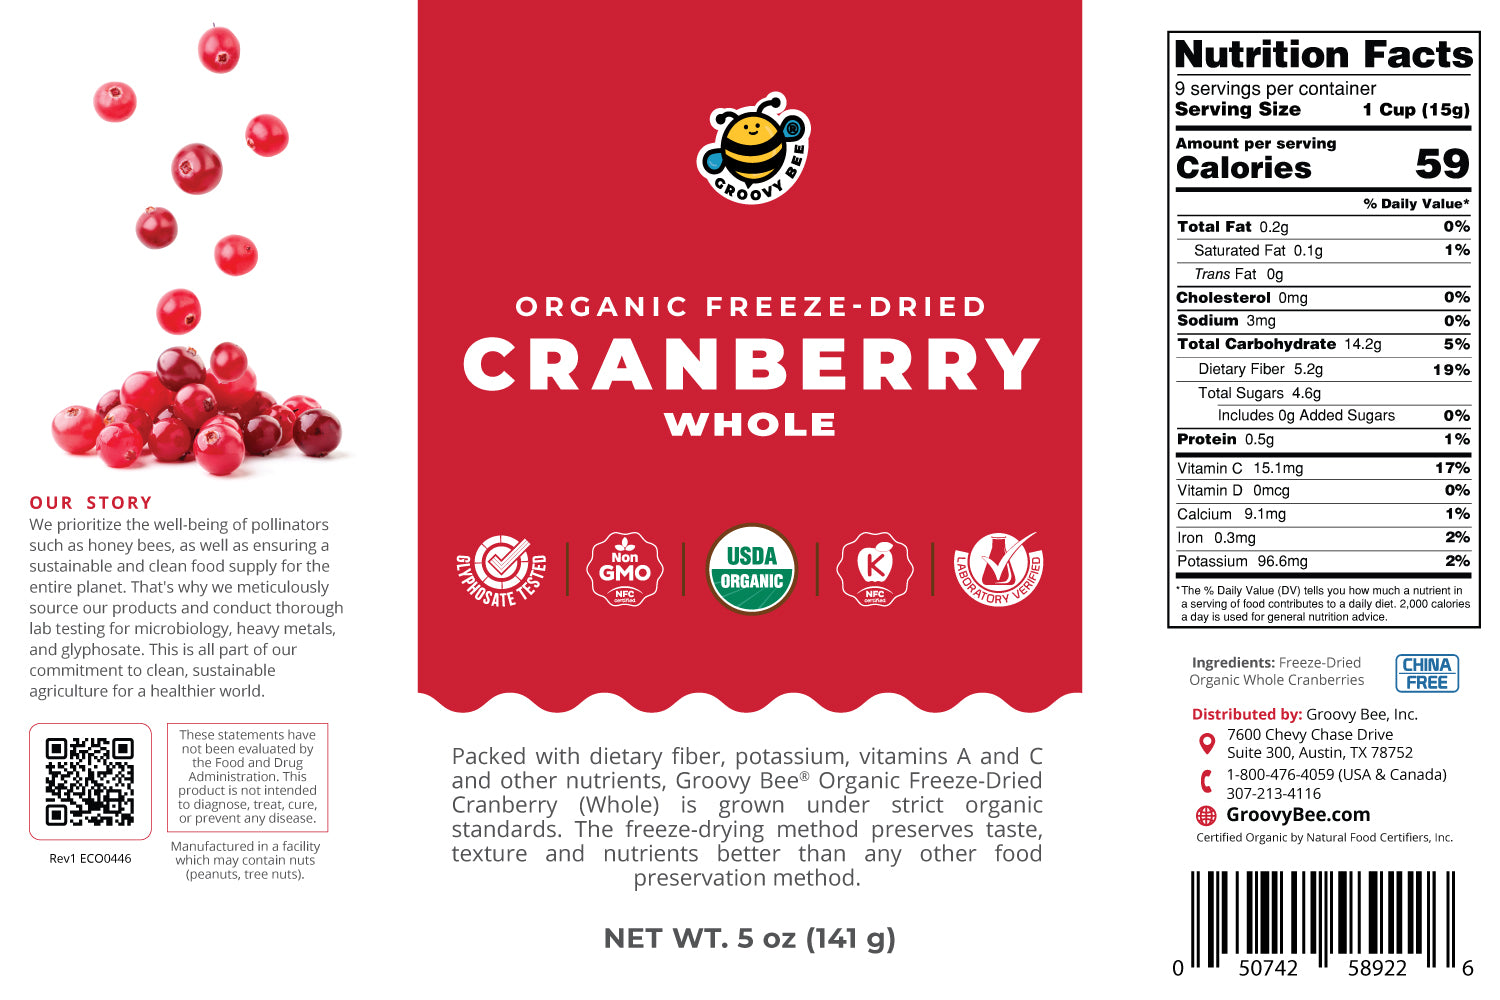 Organic Freeze-Dried Cranberry Whole (5 oz, 141g) 